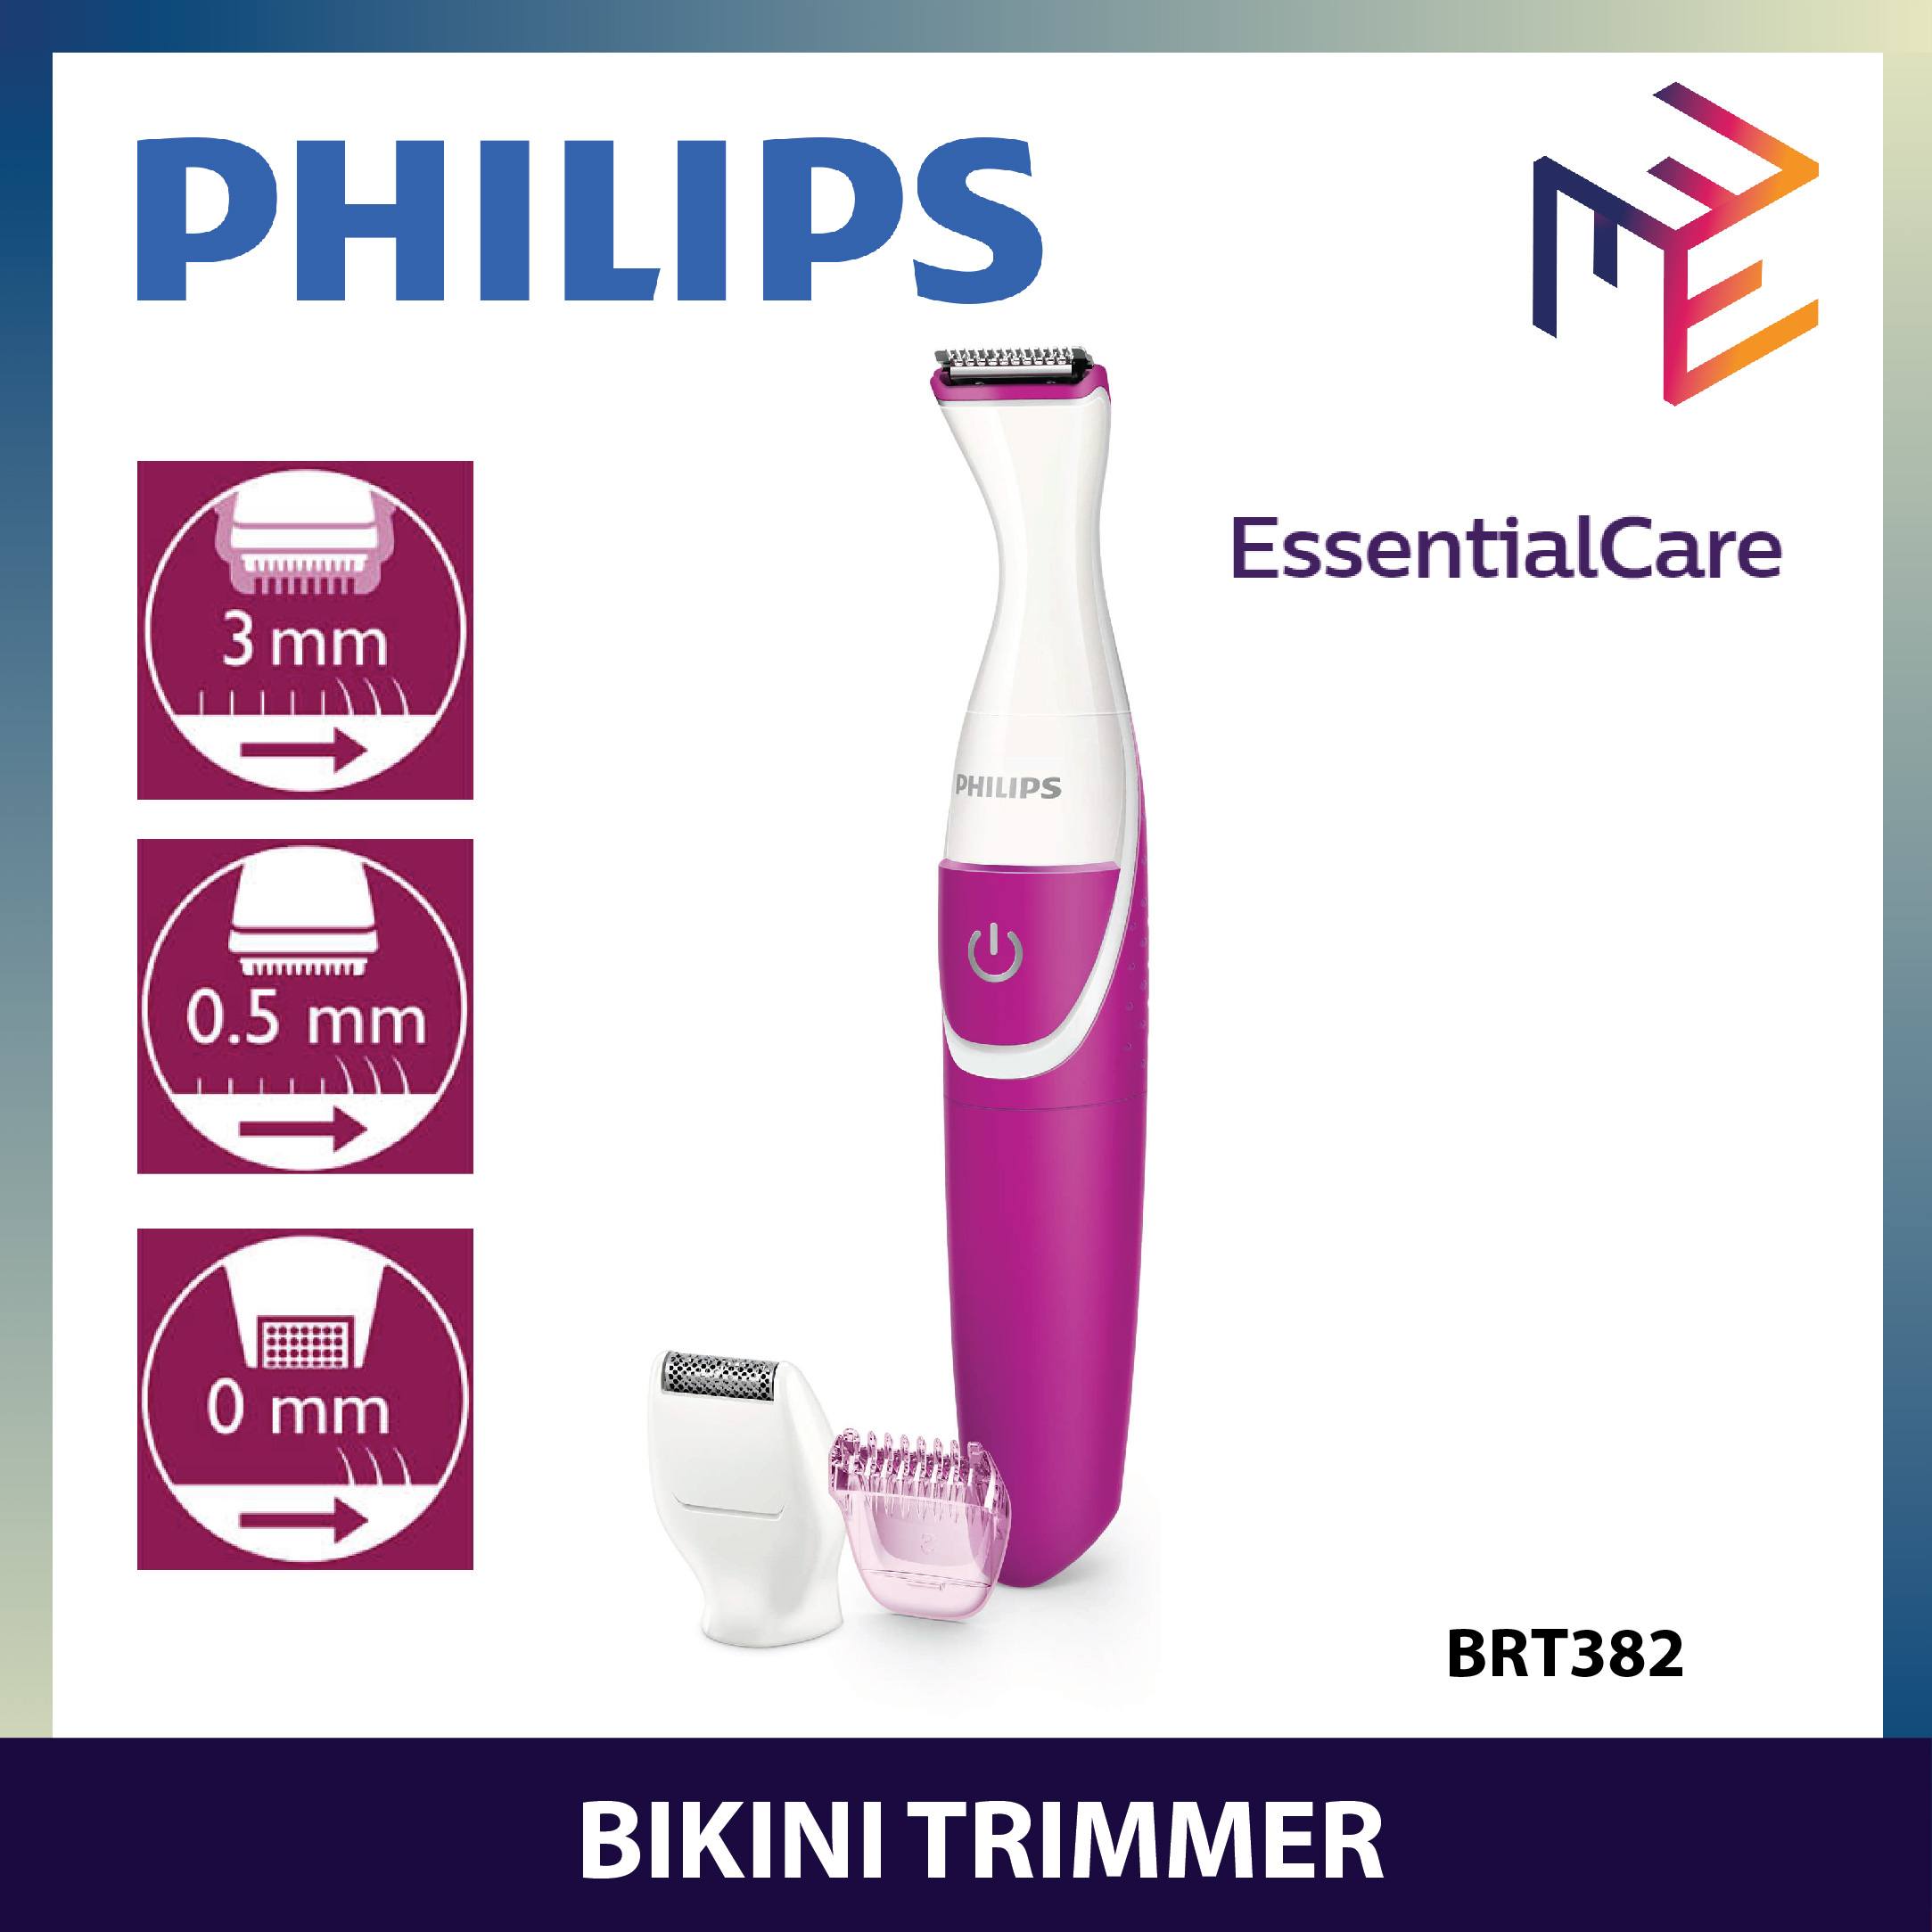 philips bikini trimmer for women